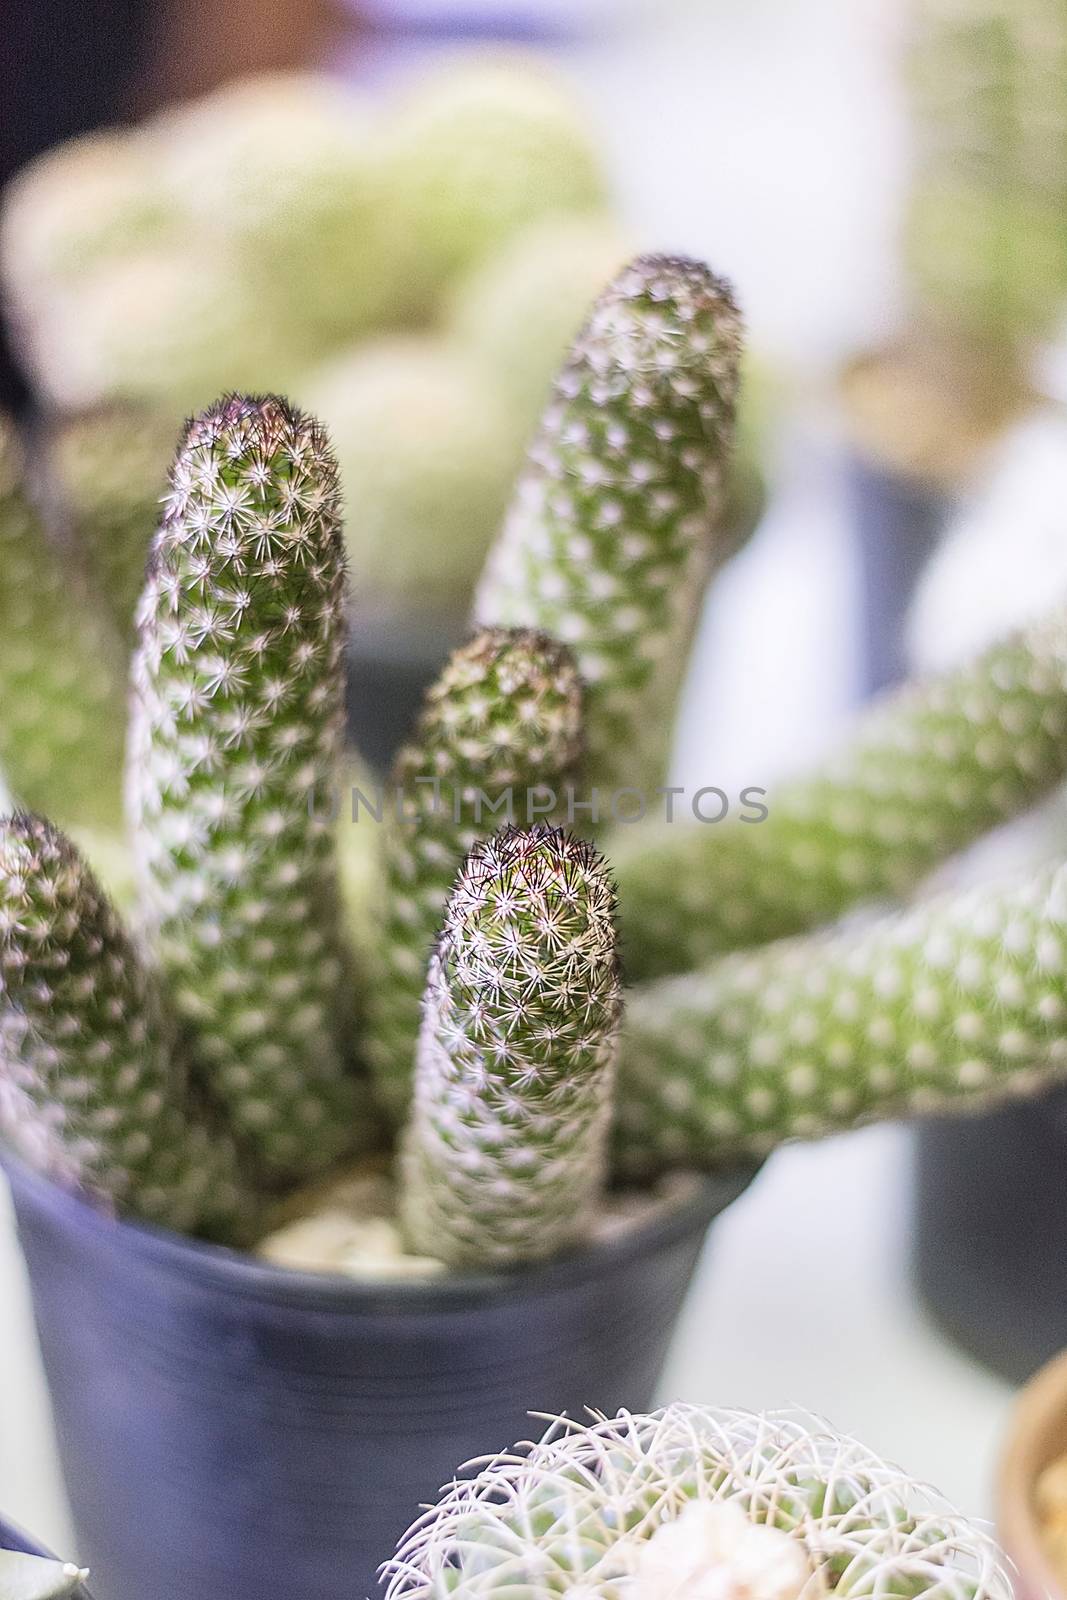 Close up of beautiful cactus with thorns by rakoptonLPN